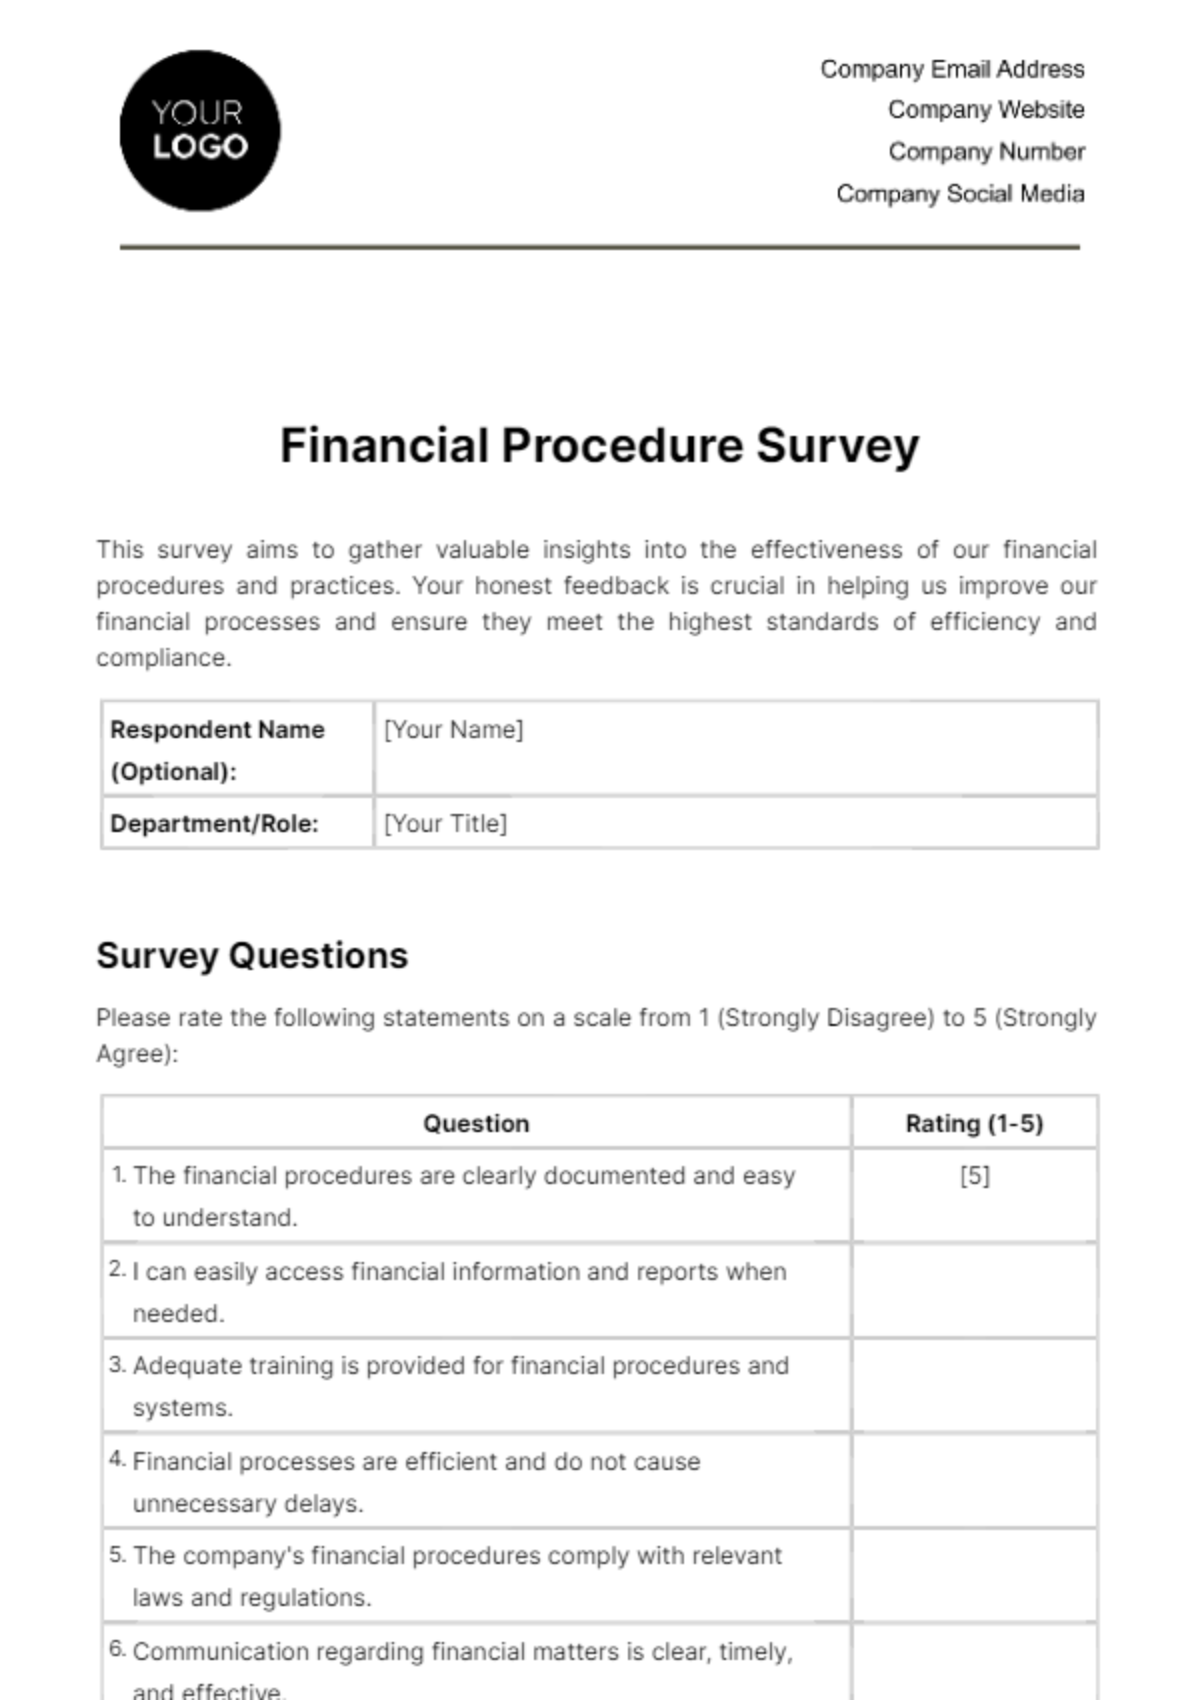 Financial Procedure Survey Template